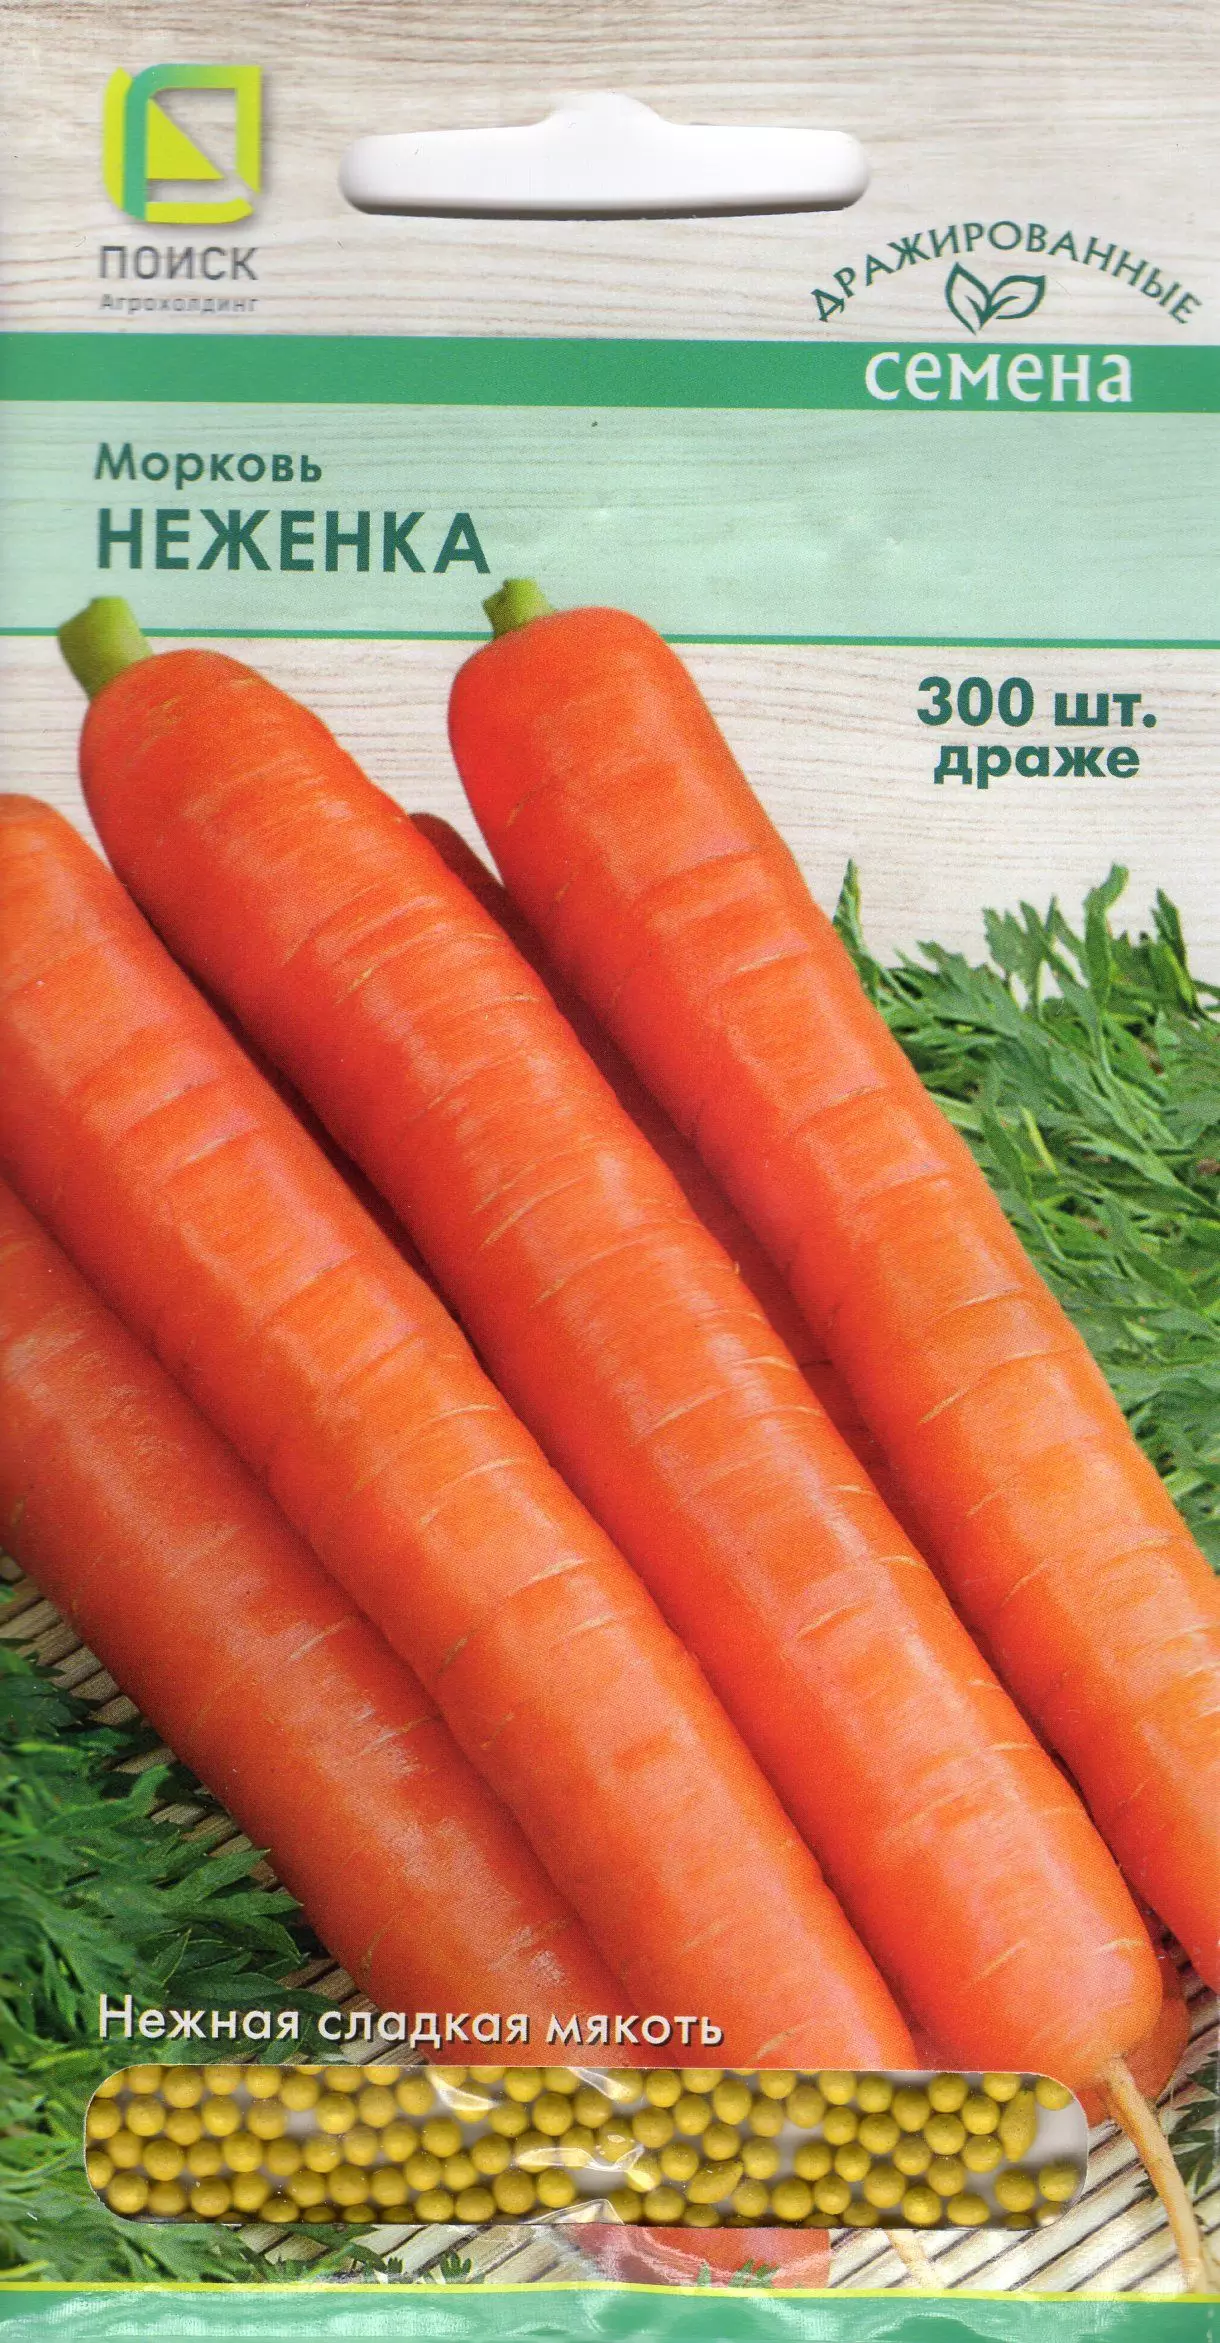 Семена Морковь Неженка. ПОИСК Ц/П драже 300 шт